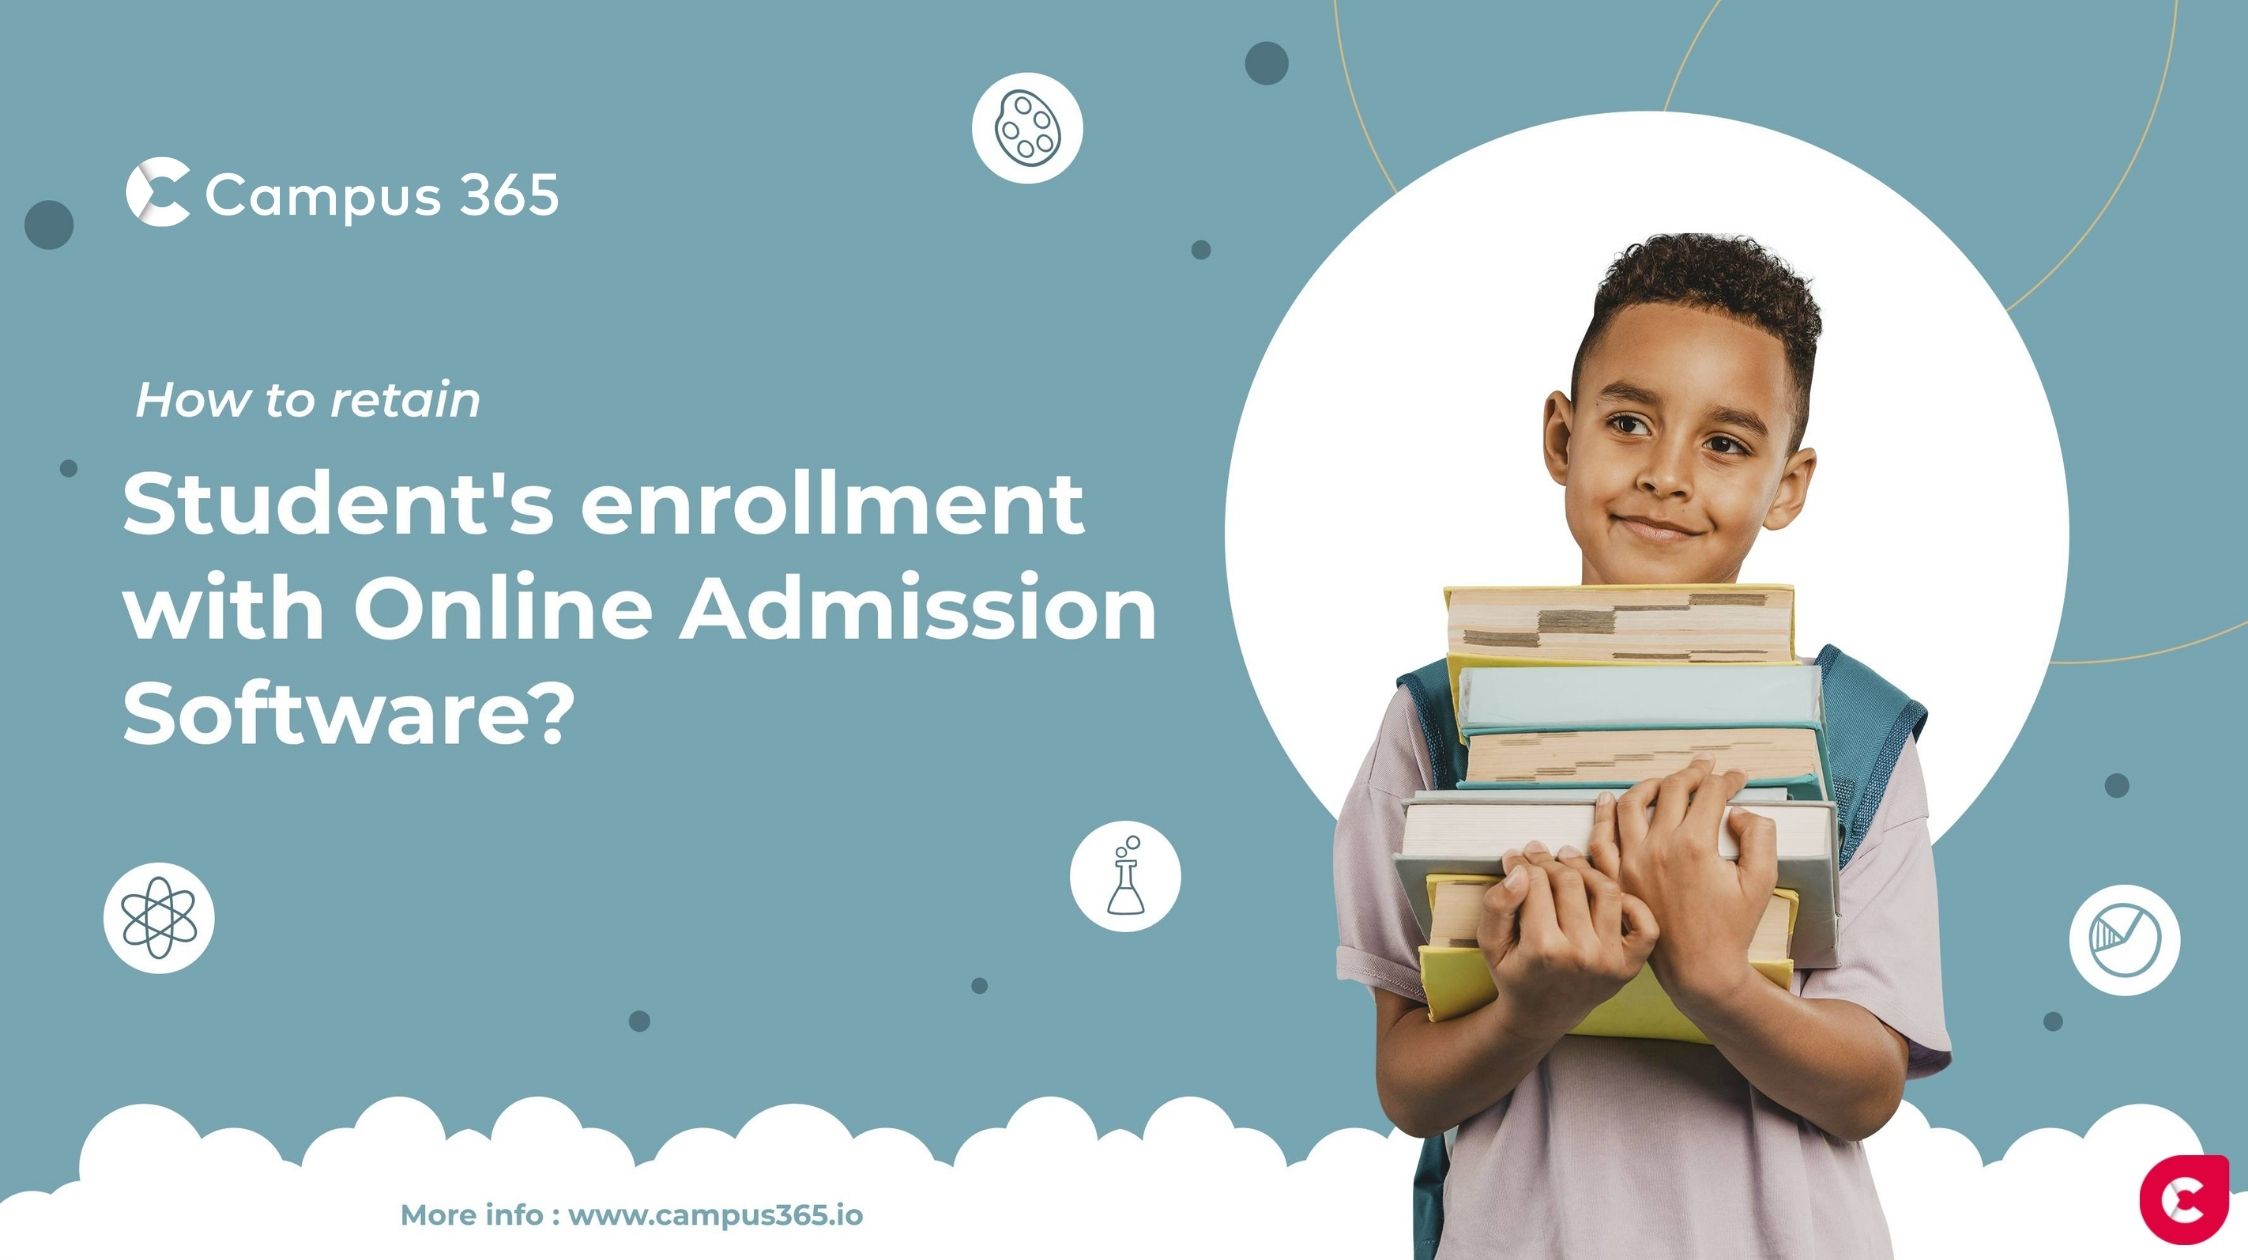 Campus 365 - Online admission software